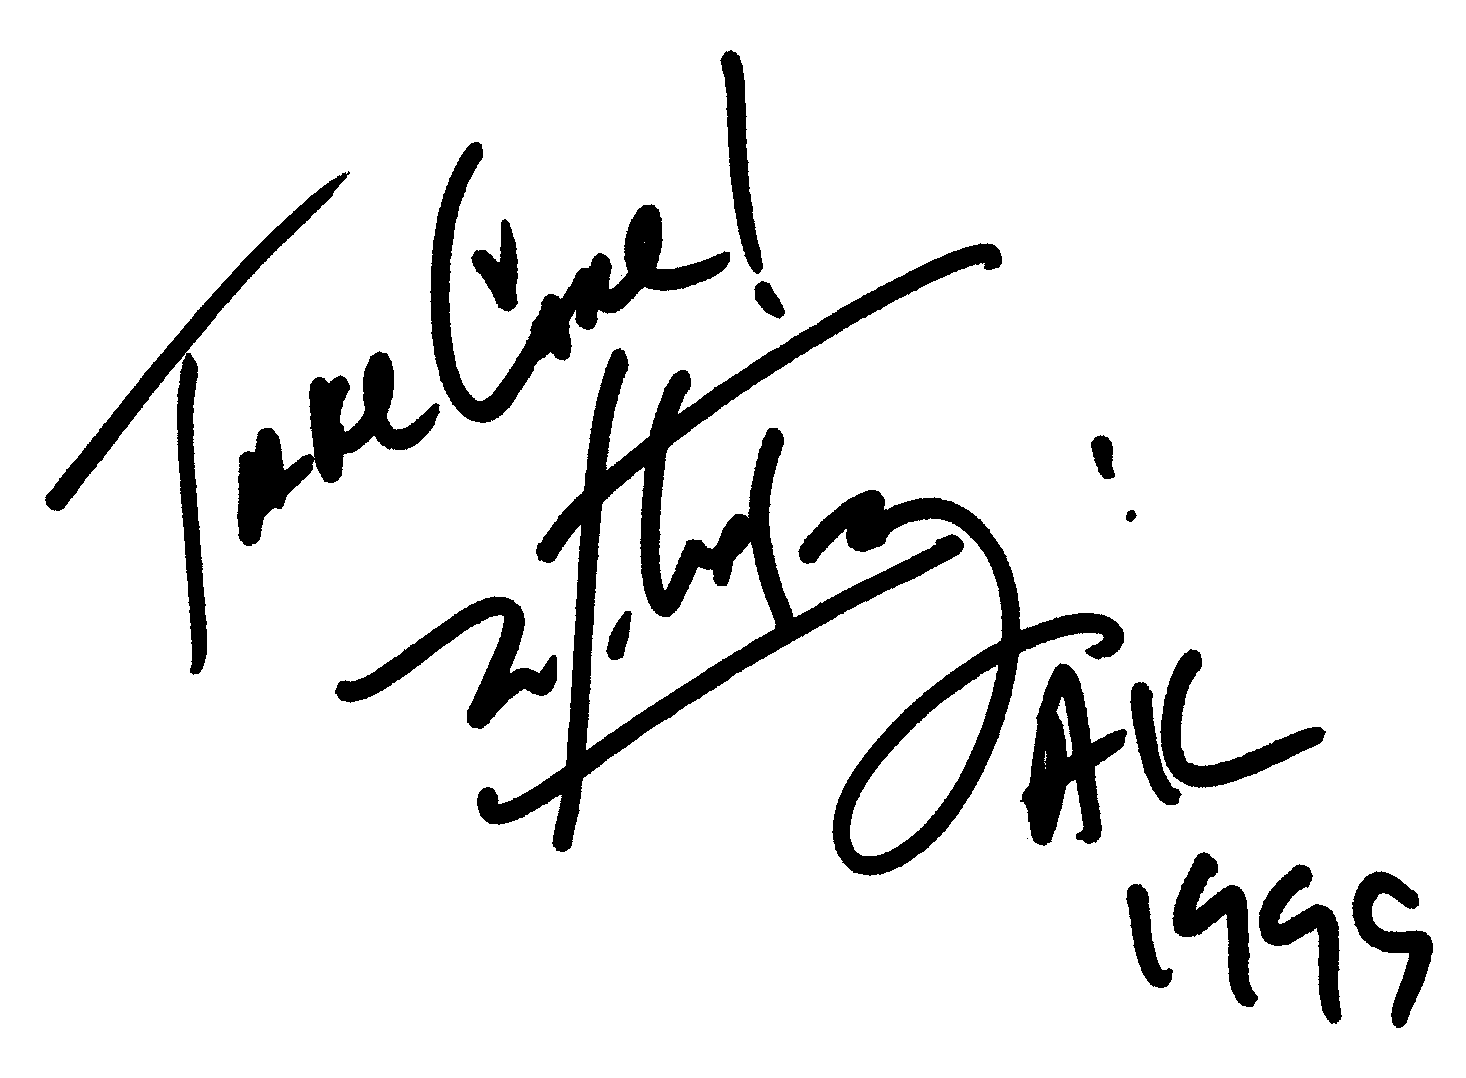 Mike Inez autograph facsimile